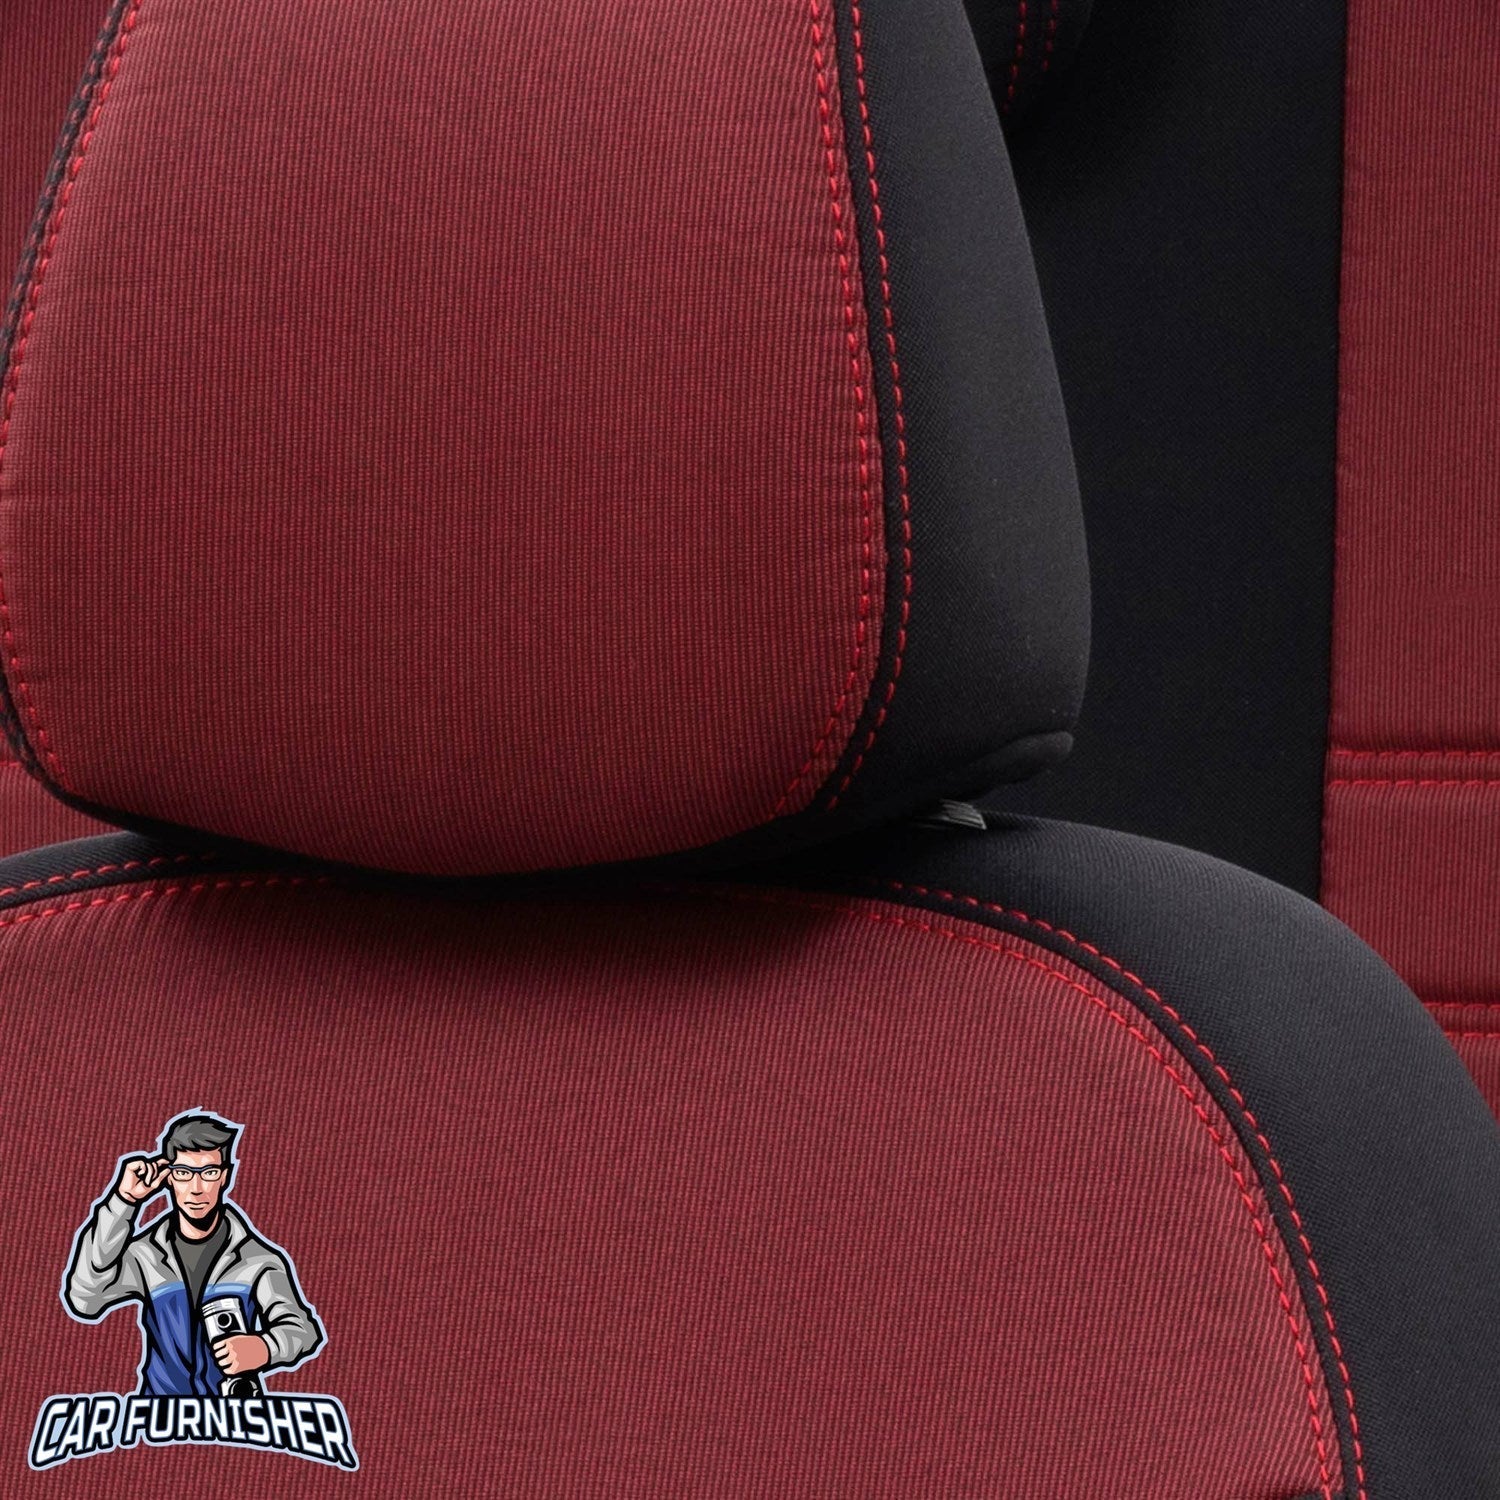 Ford S-Max Seat Covers Original Jacquard Design Red Jacquard Fabric